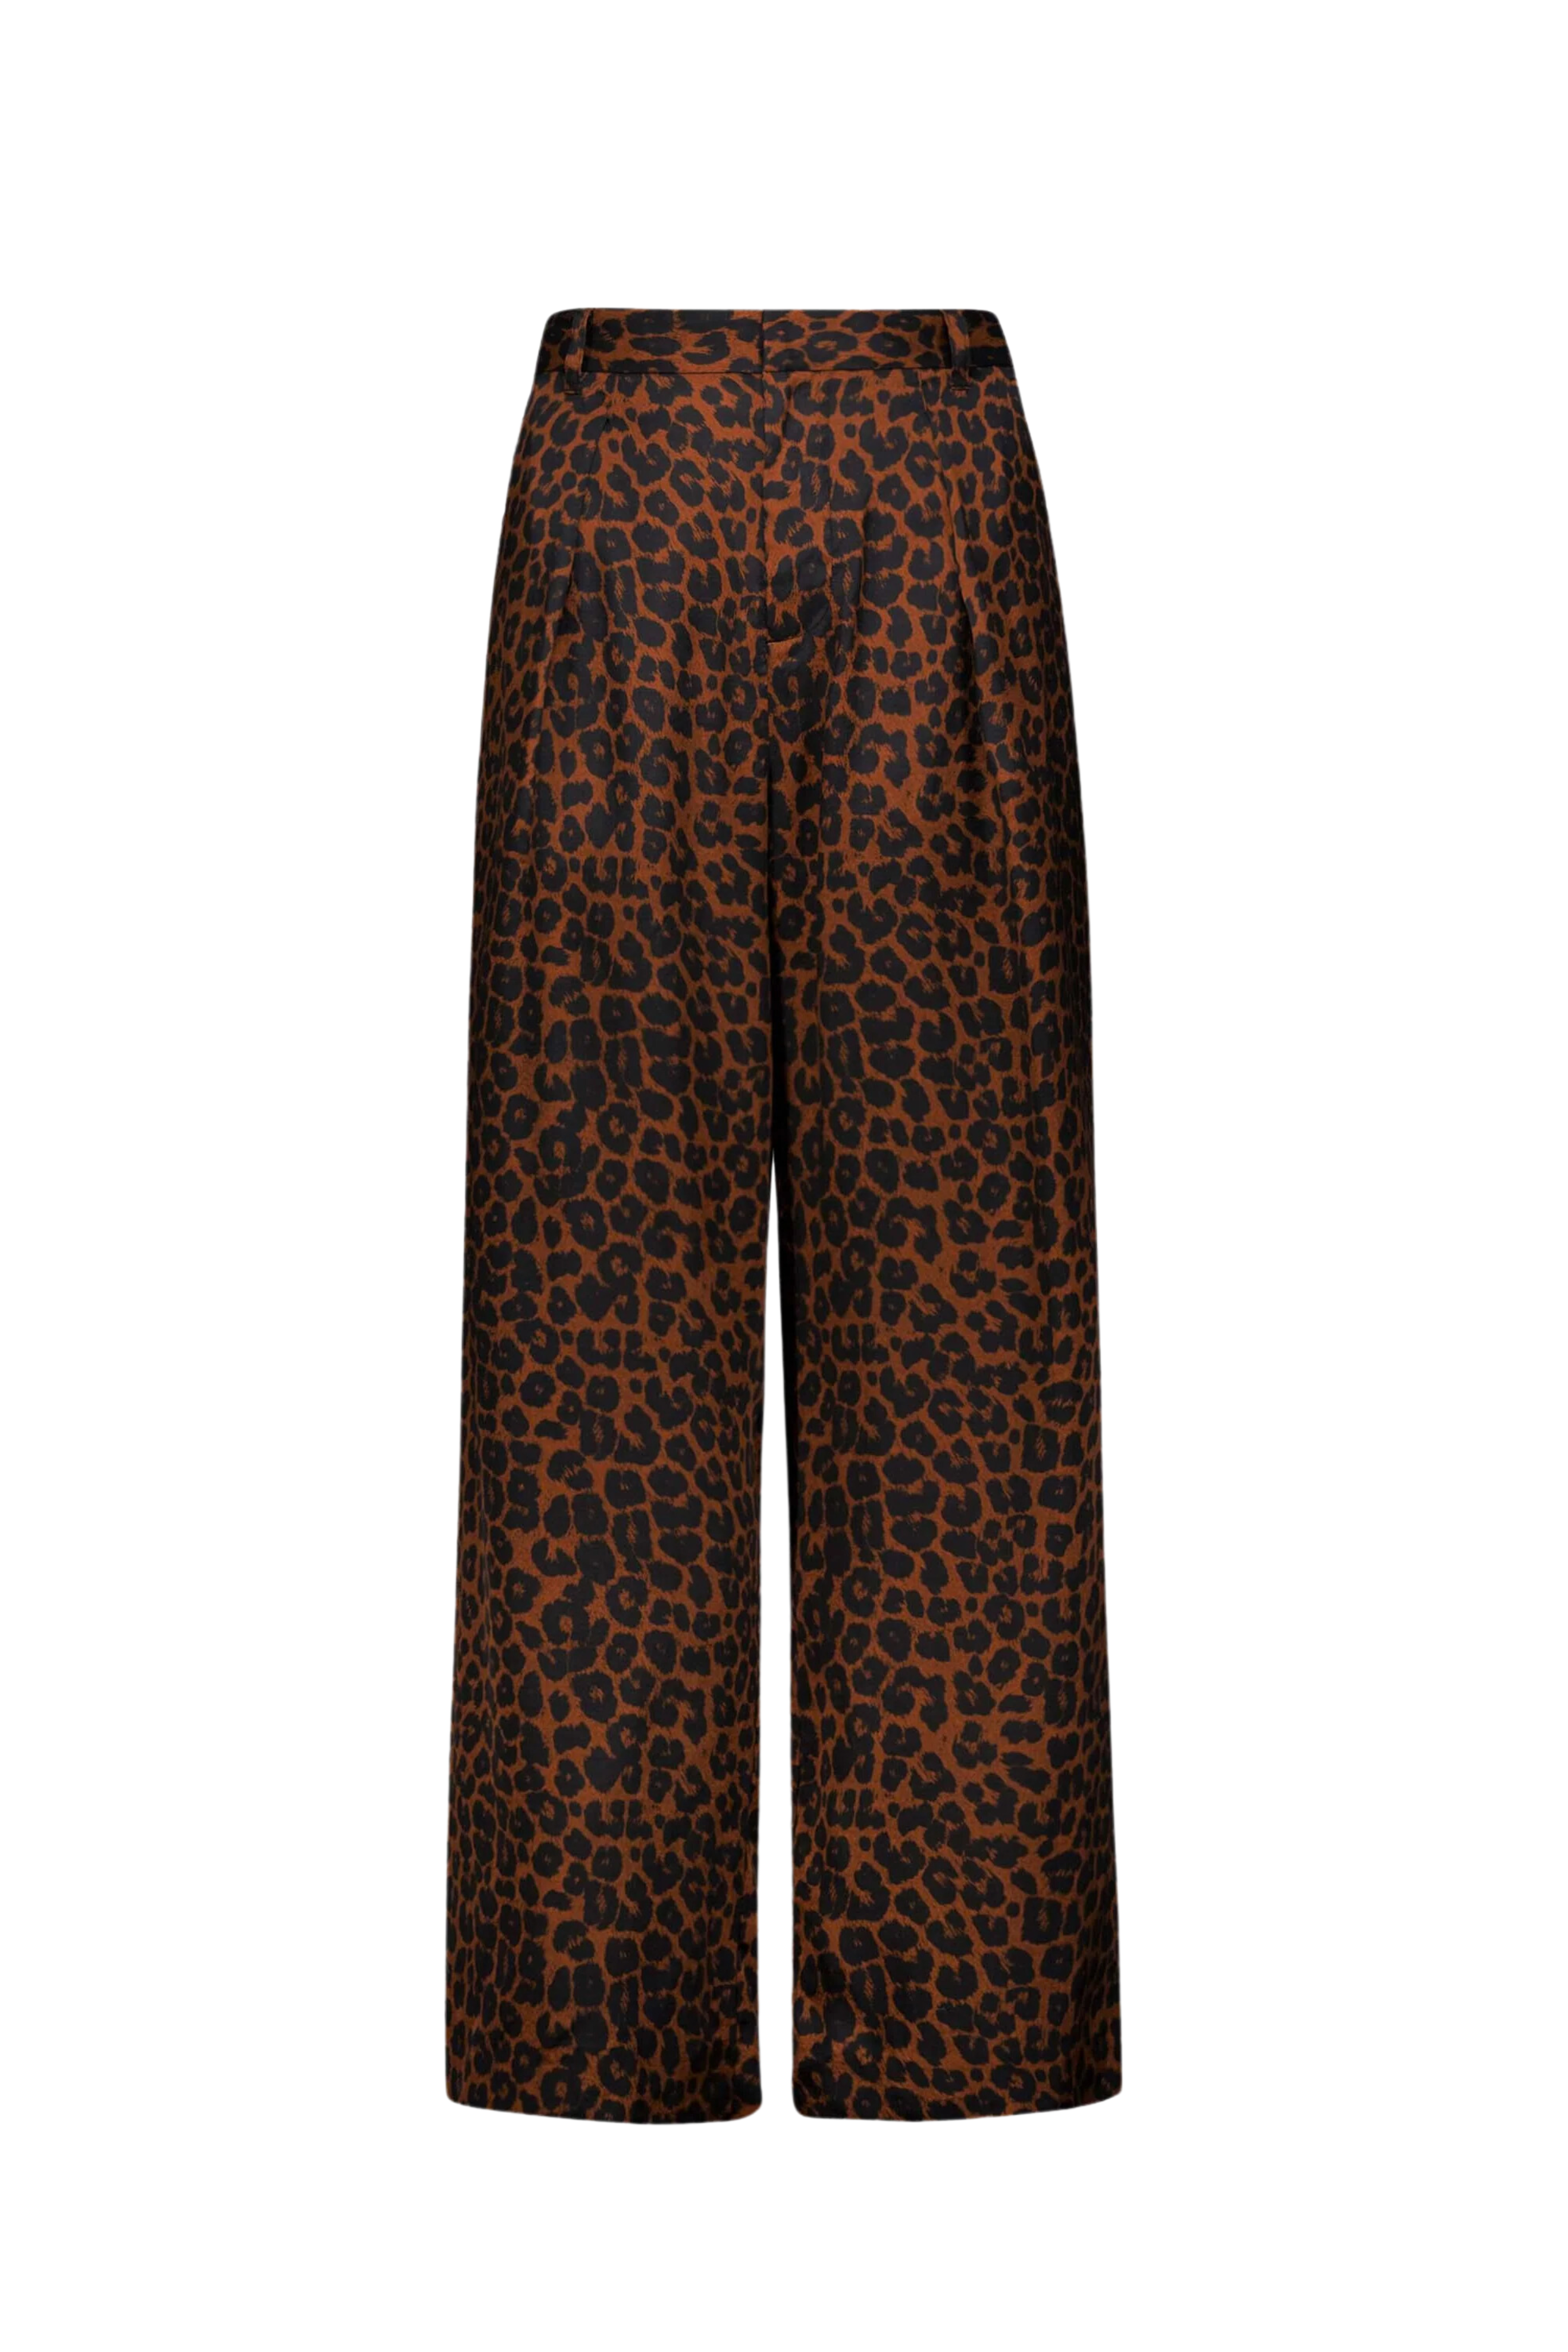 Marella Pant In Leopard Print